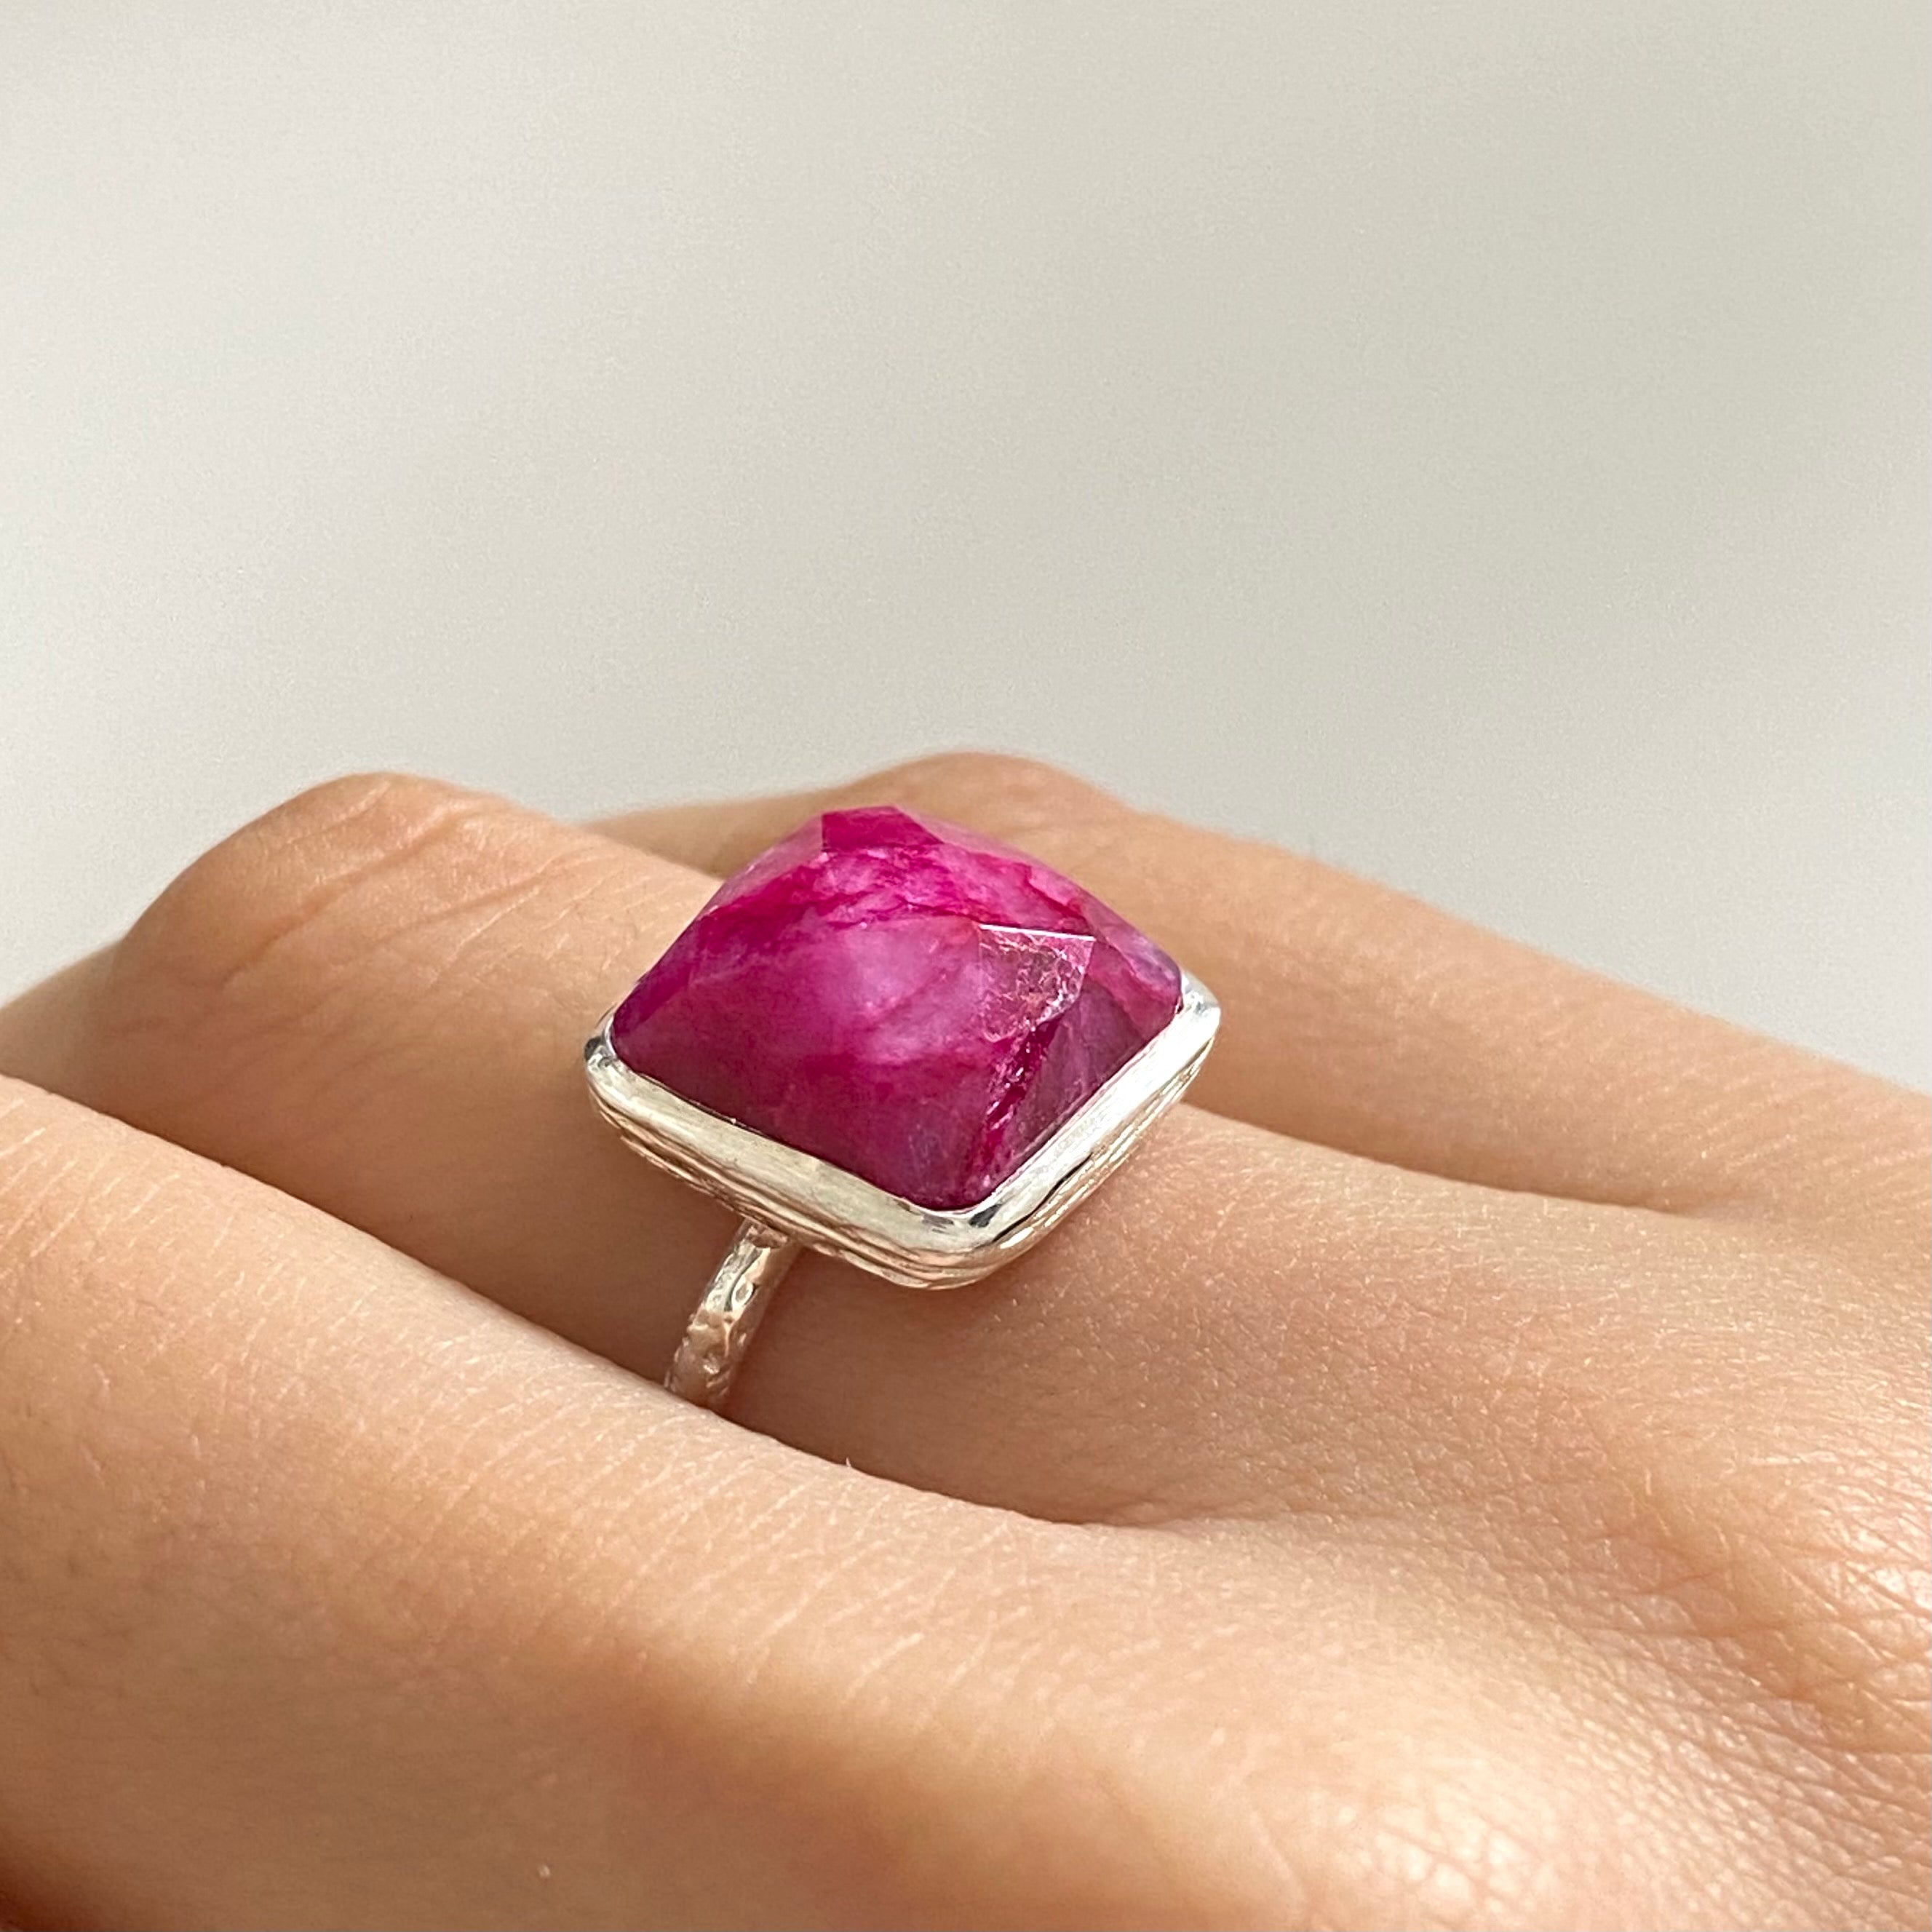 Sterling Silver Ring with Square Semiprecious Stone - Ruby Quartz